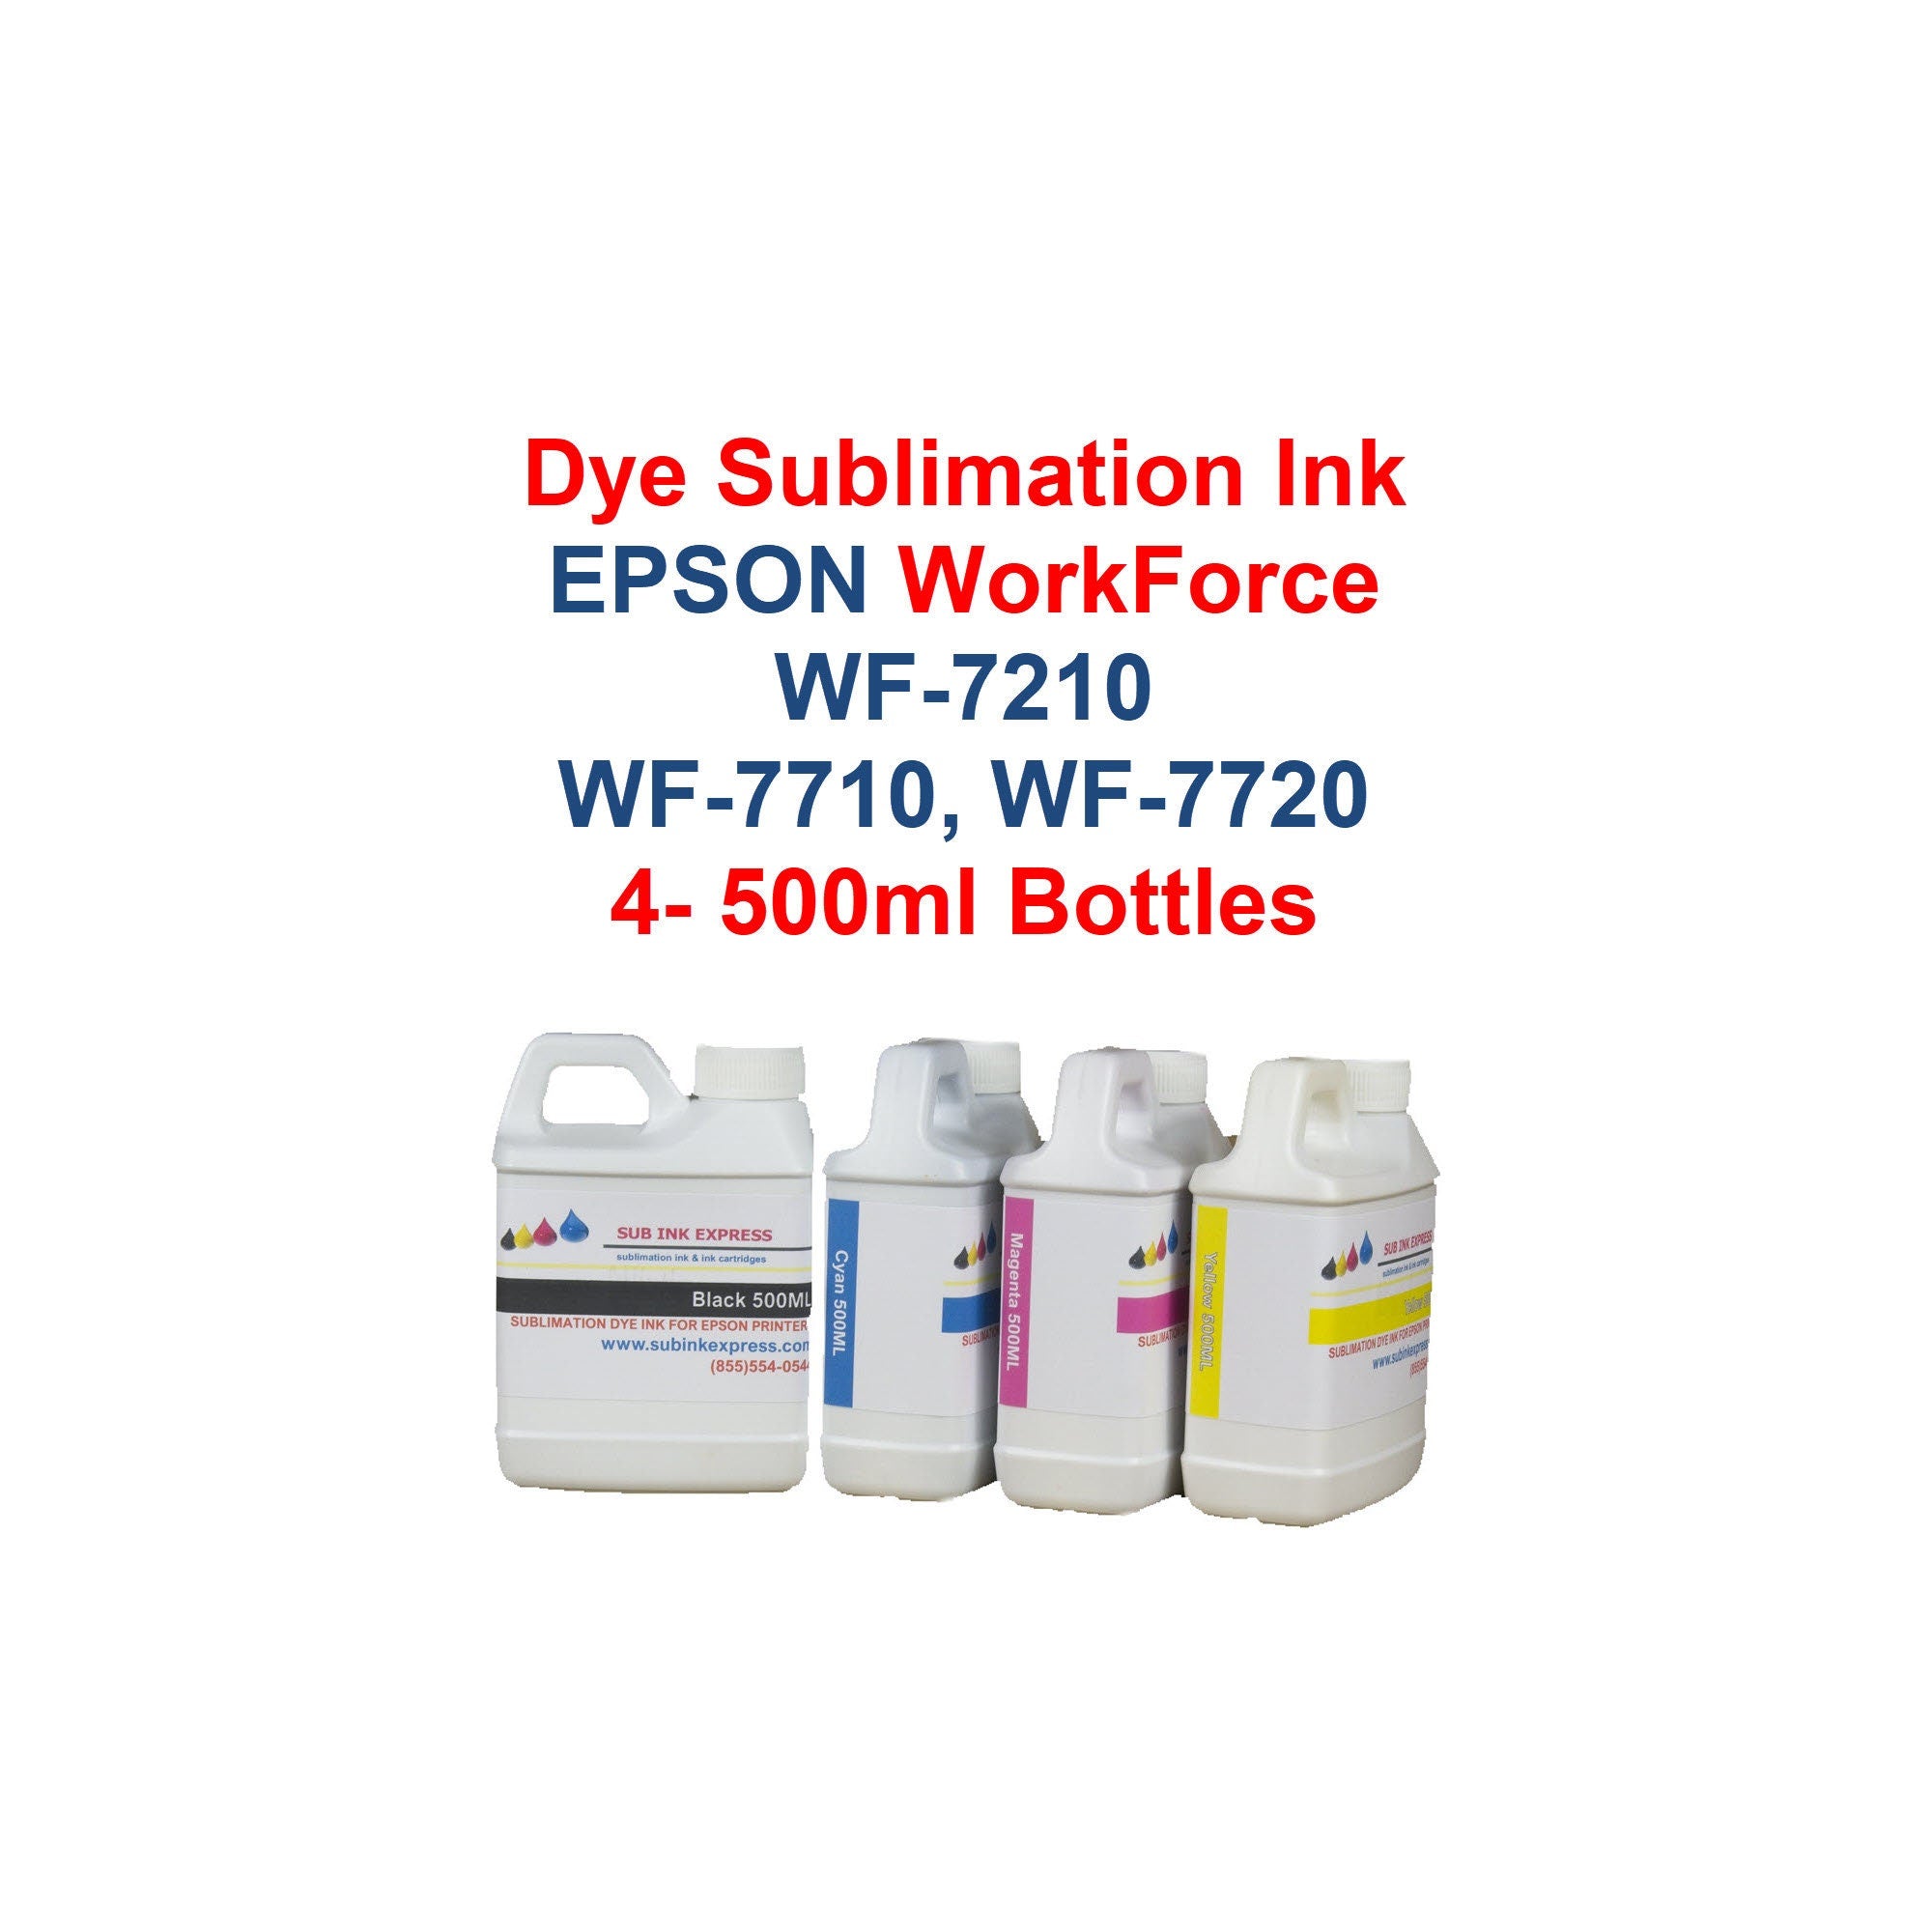 Dye Sublimation Ink 4 500ml Bottles For Epson Workforce Wf 7210 Wf 7 Subinkexpress 1397